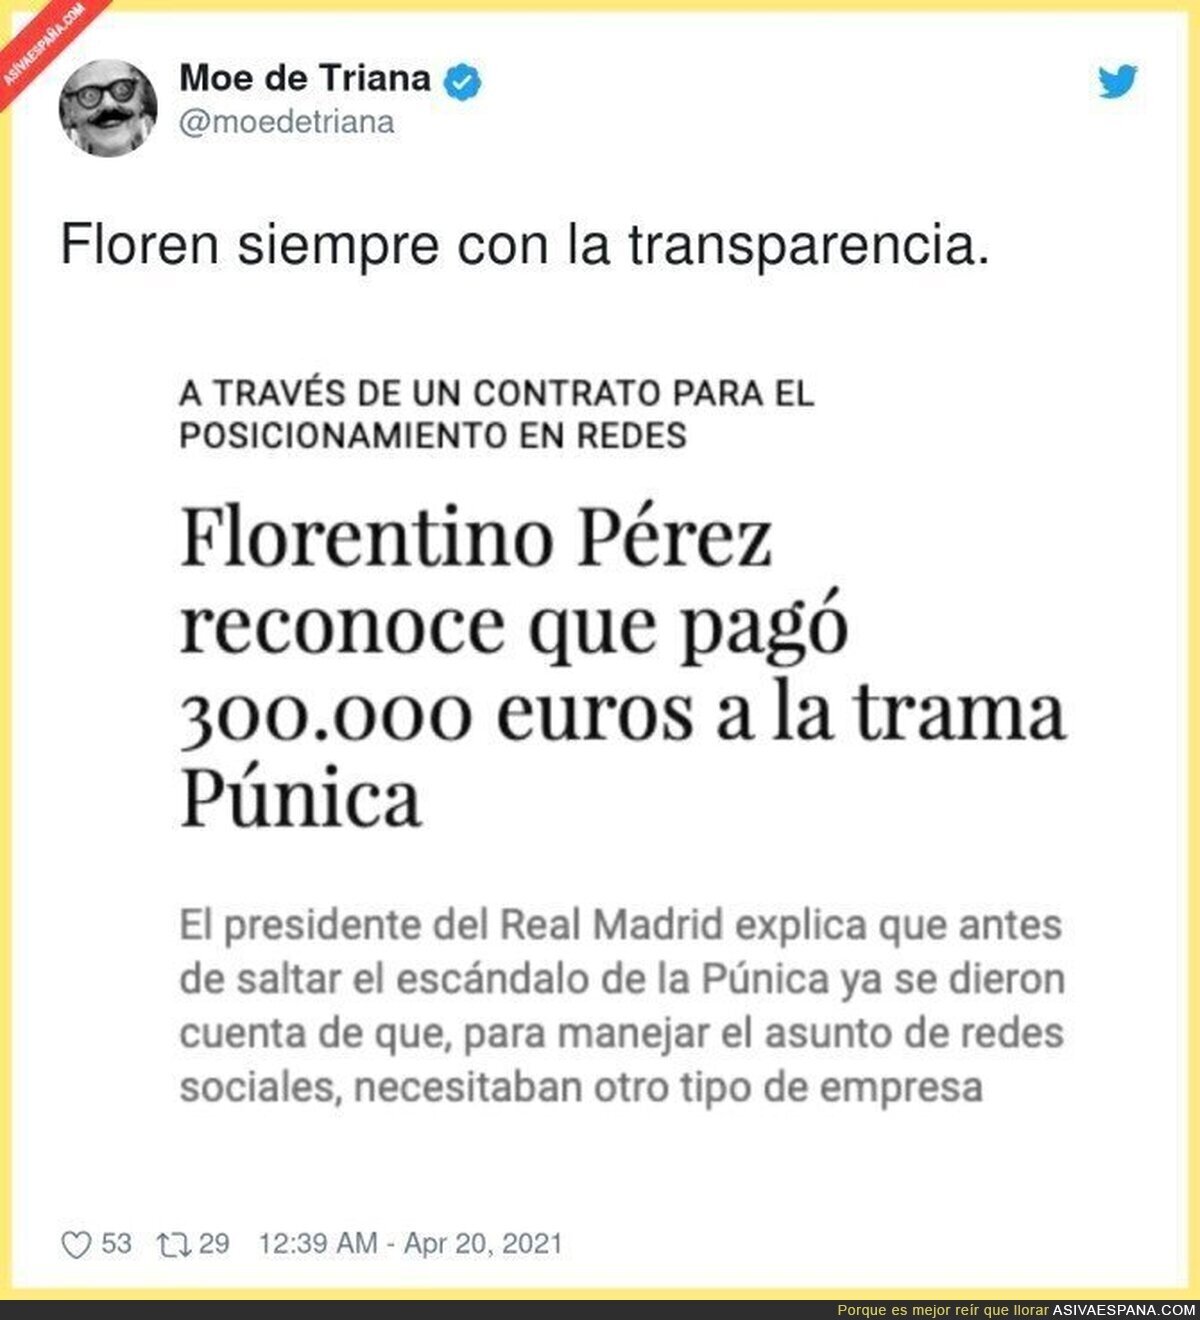 La transparencia que predica Florentino Pérez